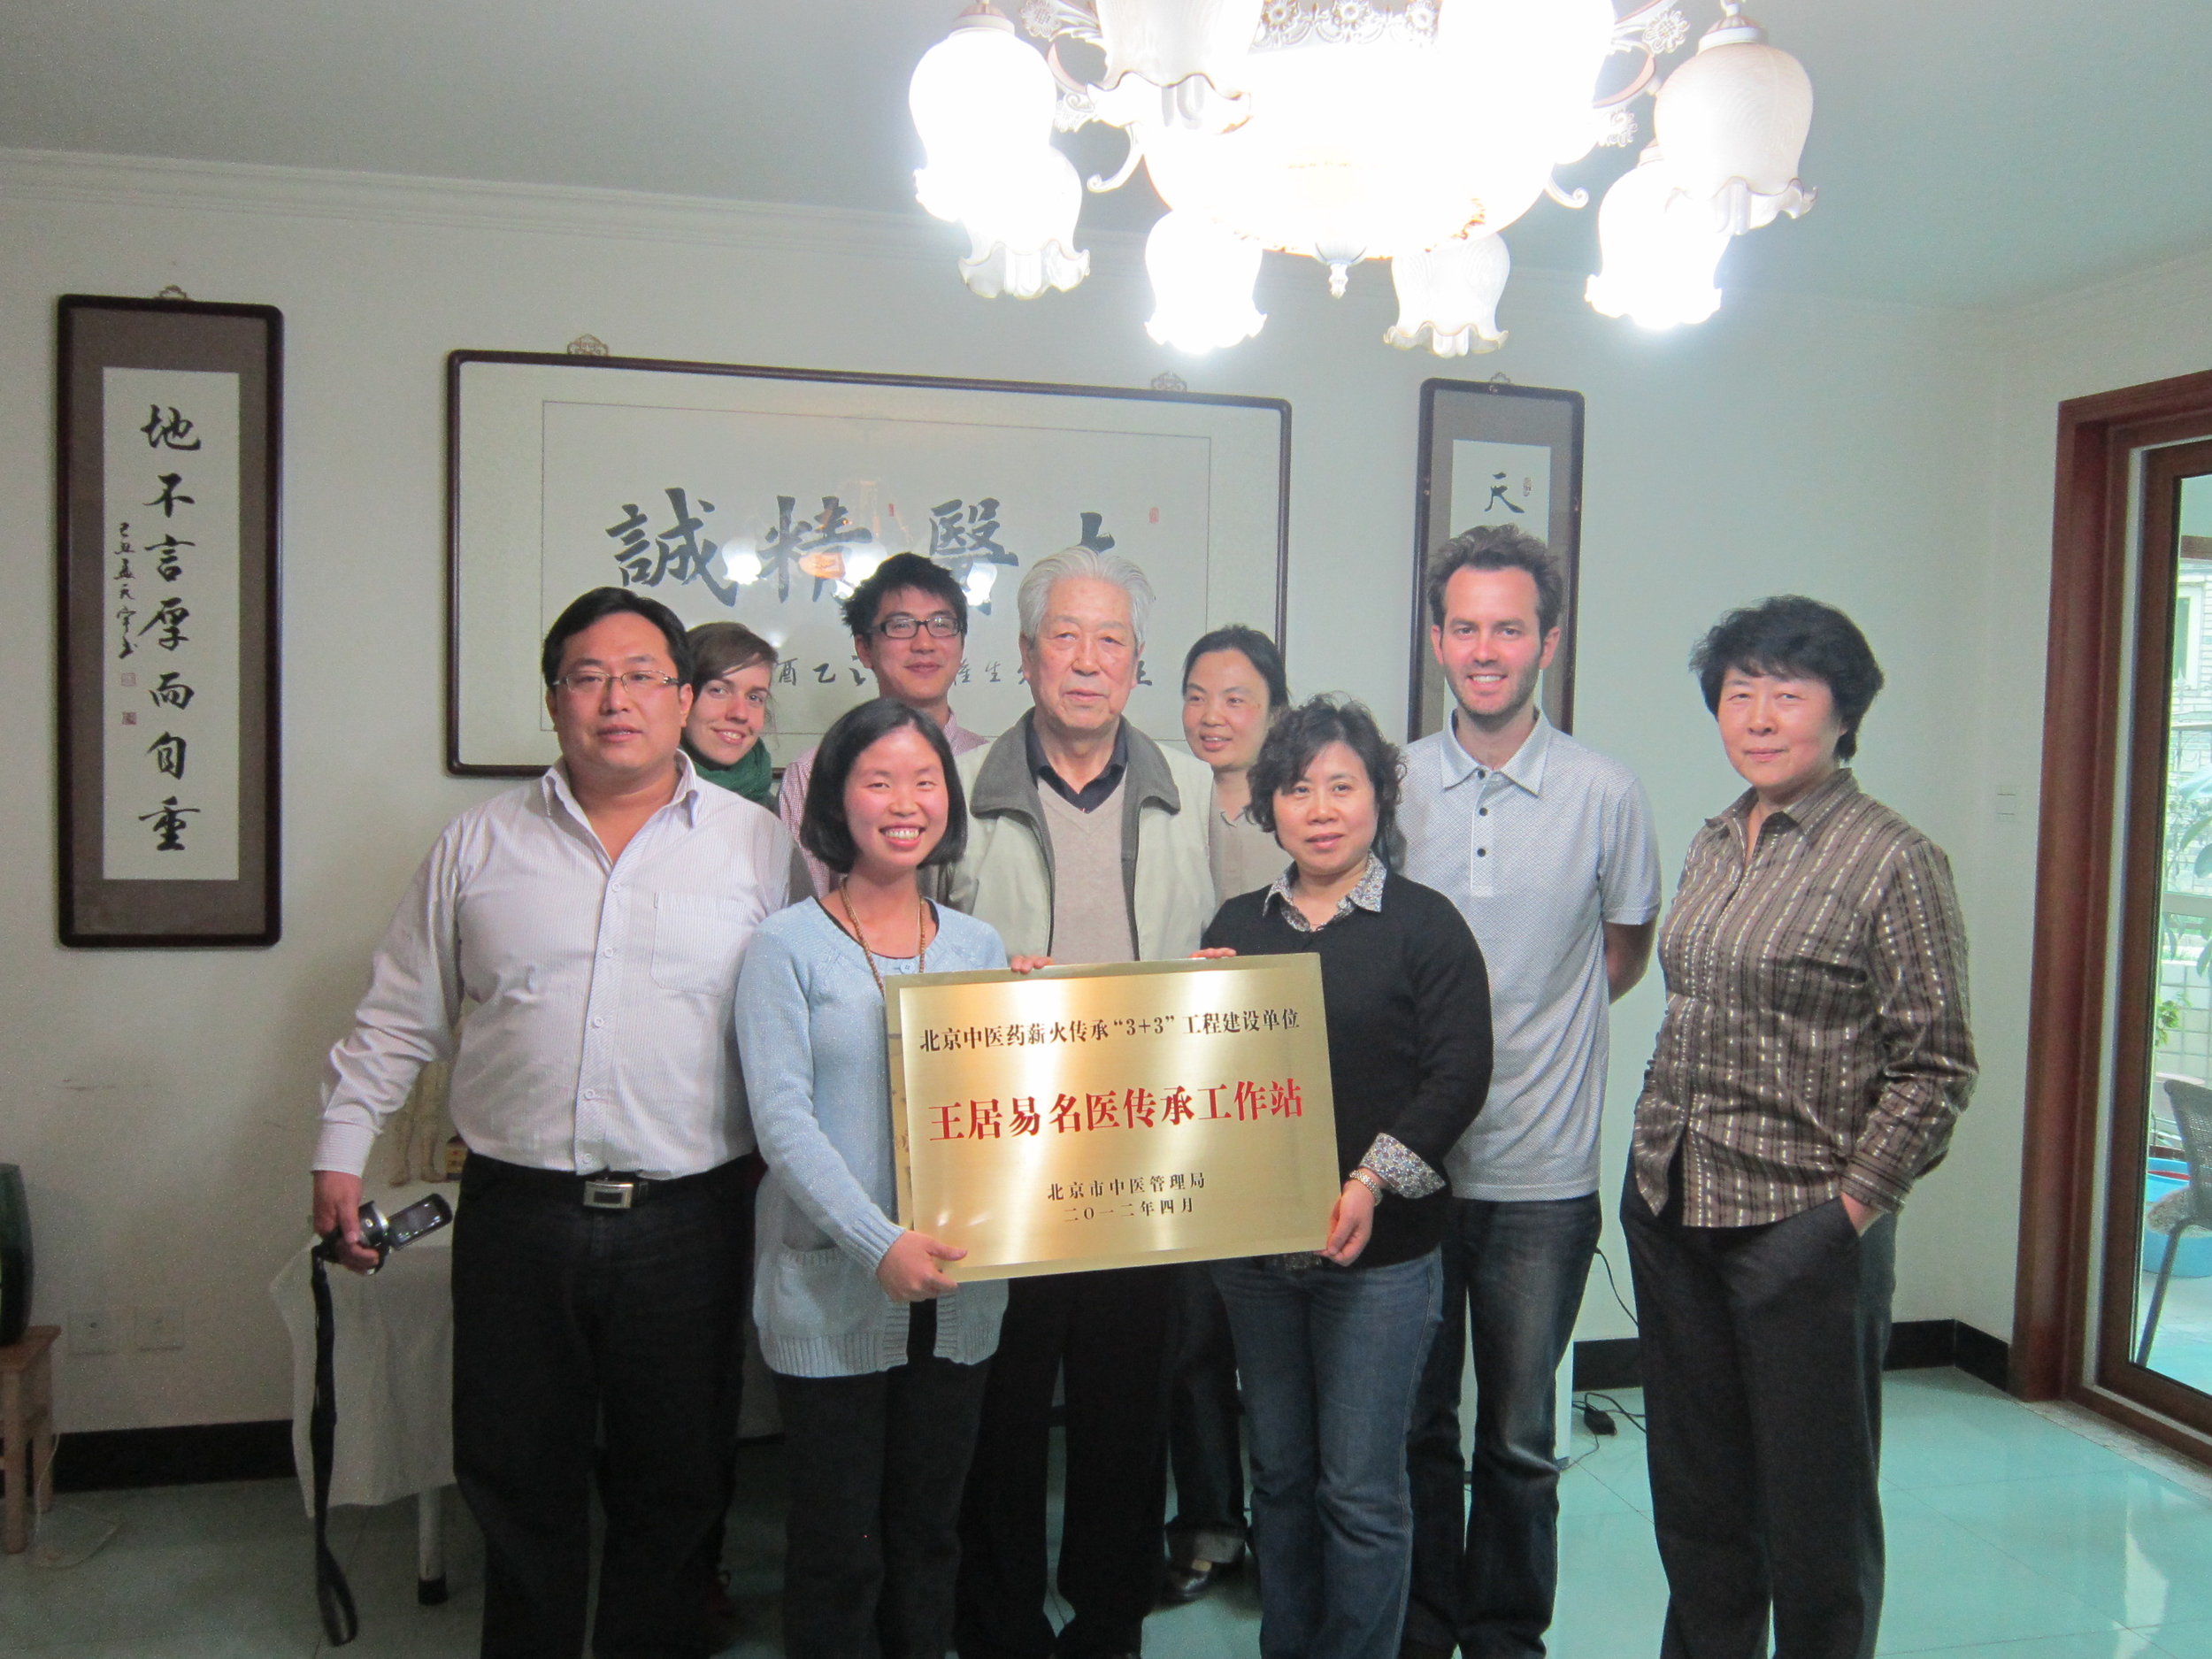 35 3+3 Famous Doctor of Beijing Master Apprentice Work Station  Recognition 2012.JPG